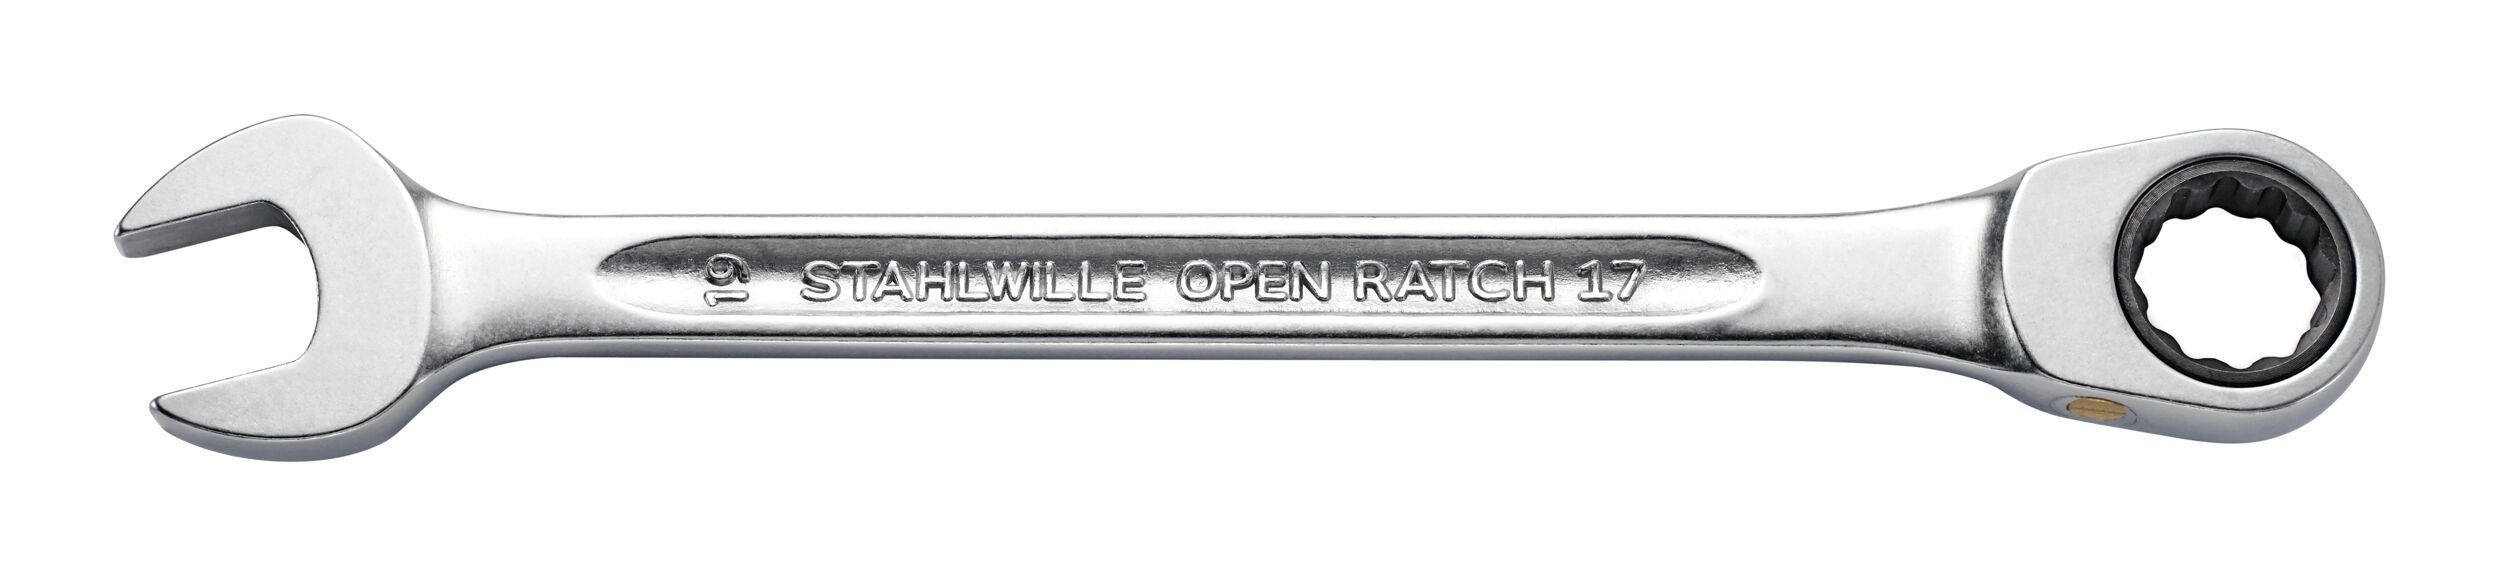 Stahlwille Ratschenringschlüssel, Maul-Ringratschen-Schlüssel gerade 22 mm